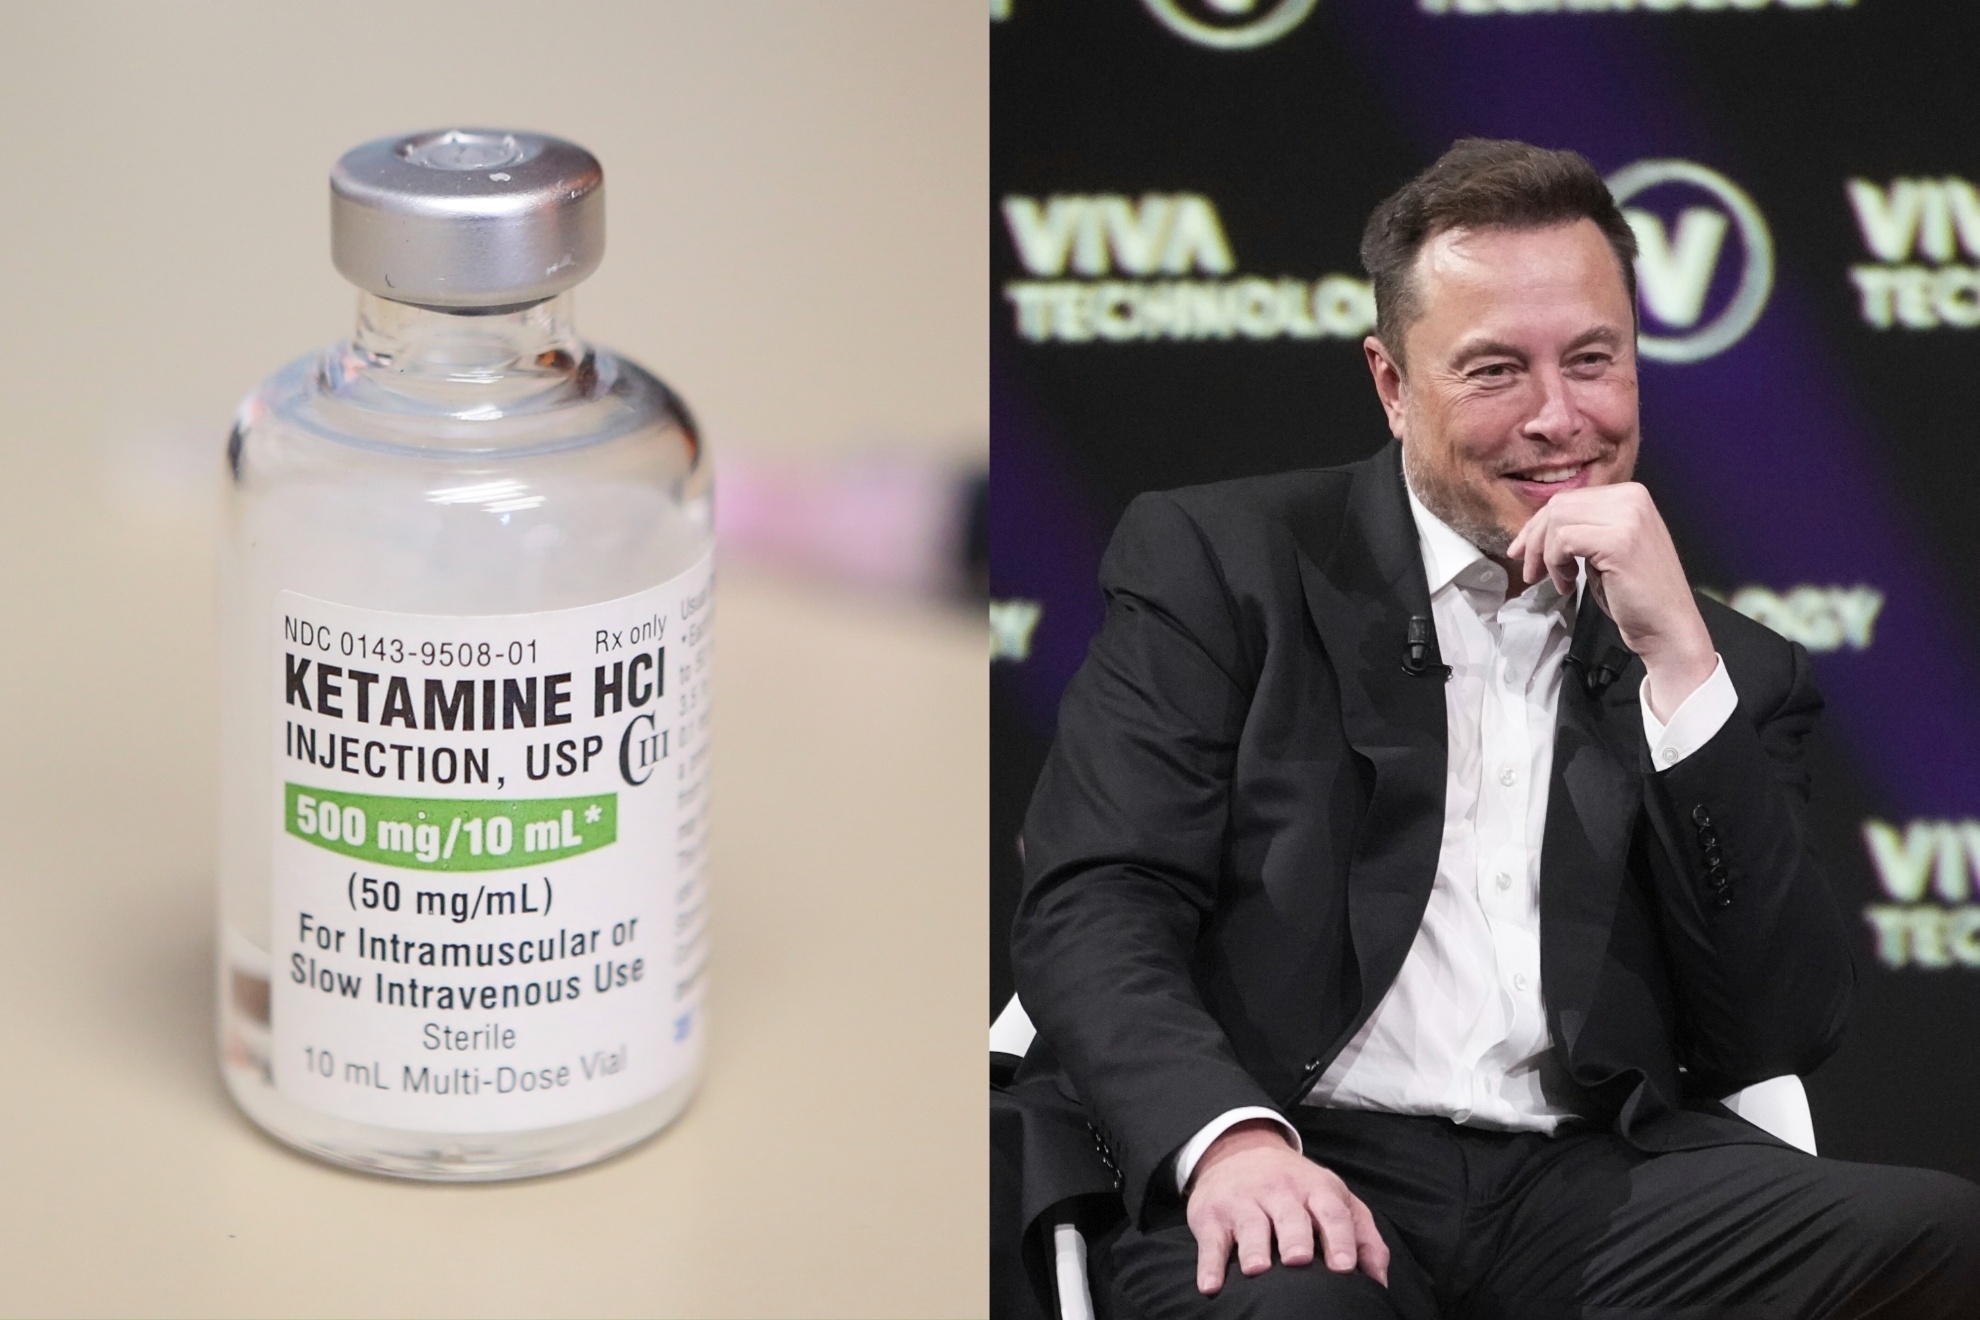 Top Tech CEOs Like Elon Musk and Google’s Co-Founder Reportedly Do Ketamine and Shrooms